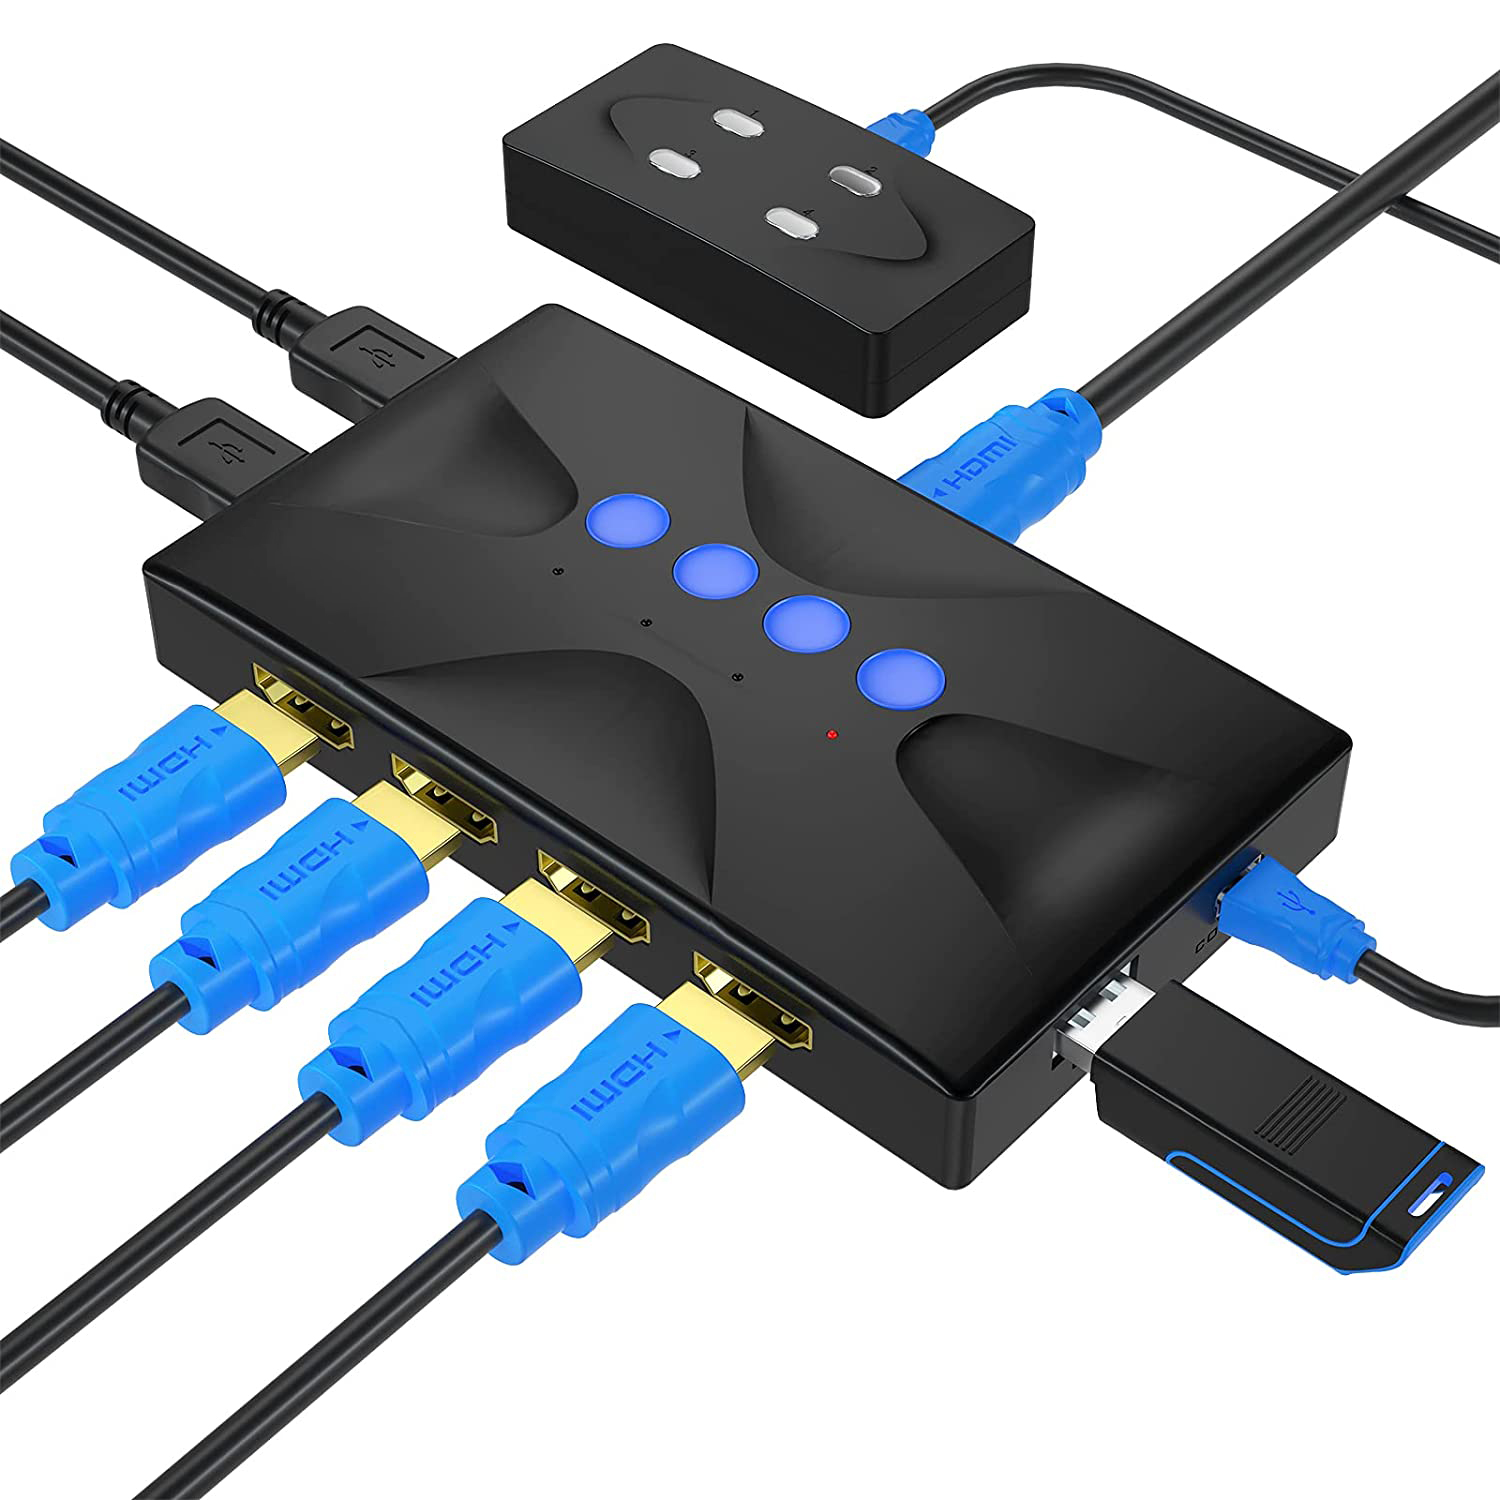 HF-KS14V1-401: HDMI 1.4 4 Port KVM Switch with 2-port USB 2.0 Hub, 4 Computers Share 1 Monitor Keyboard Mouse Printer or U-Disk